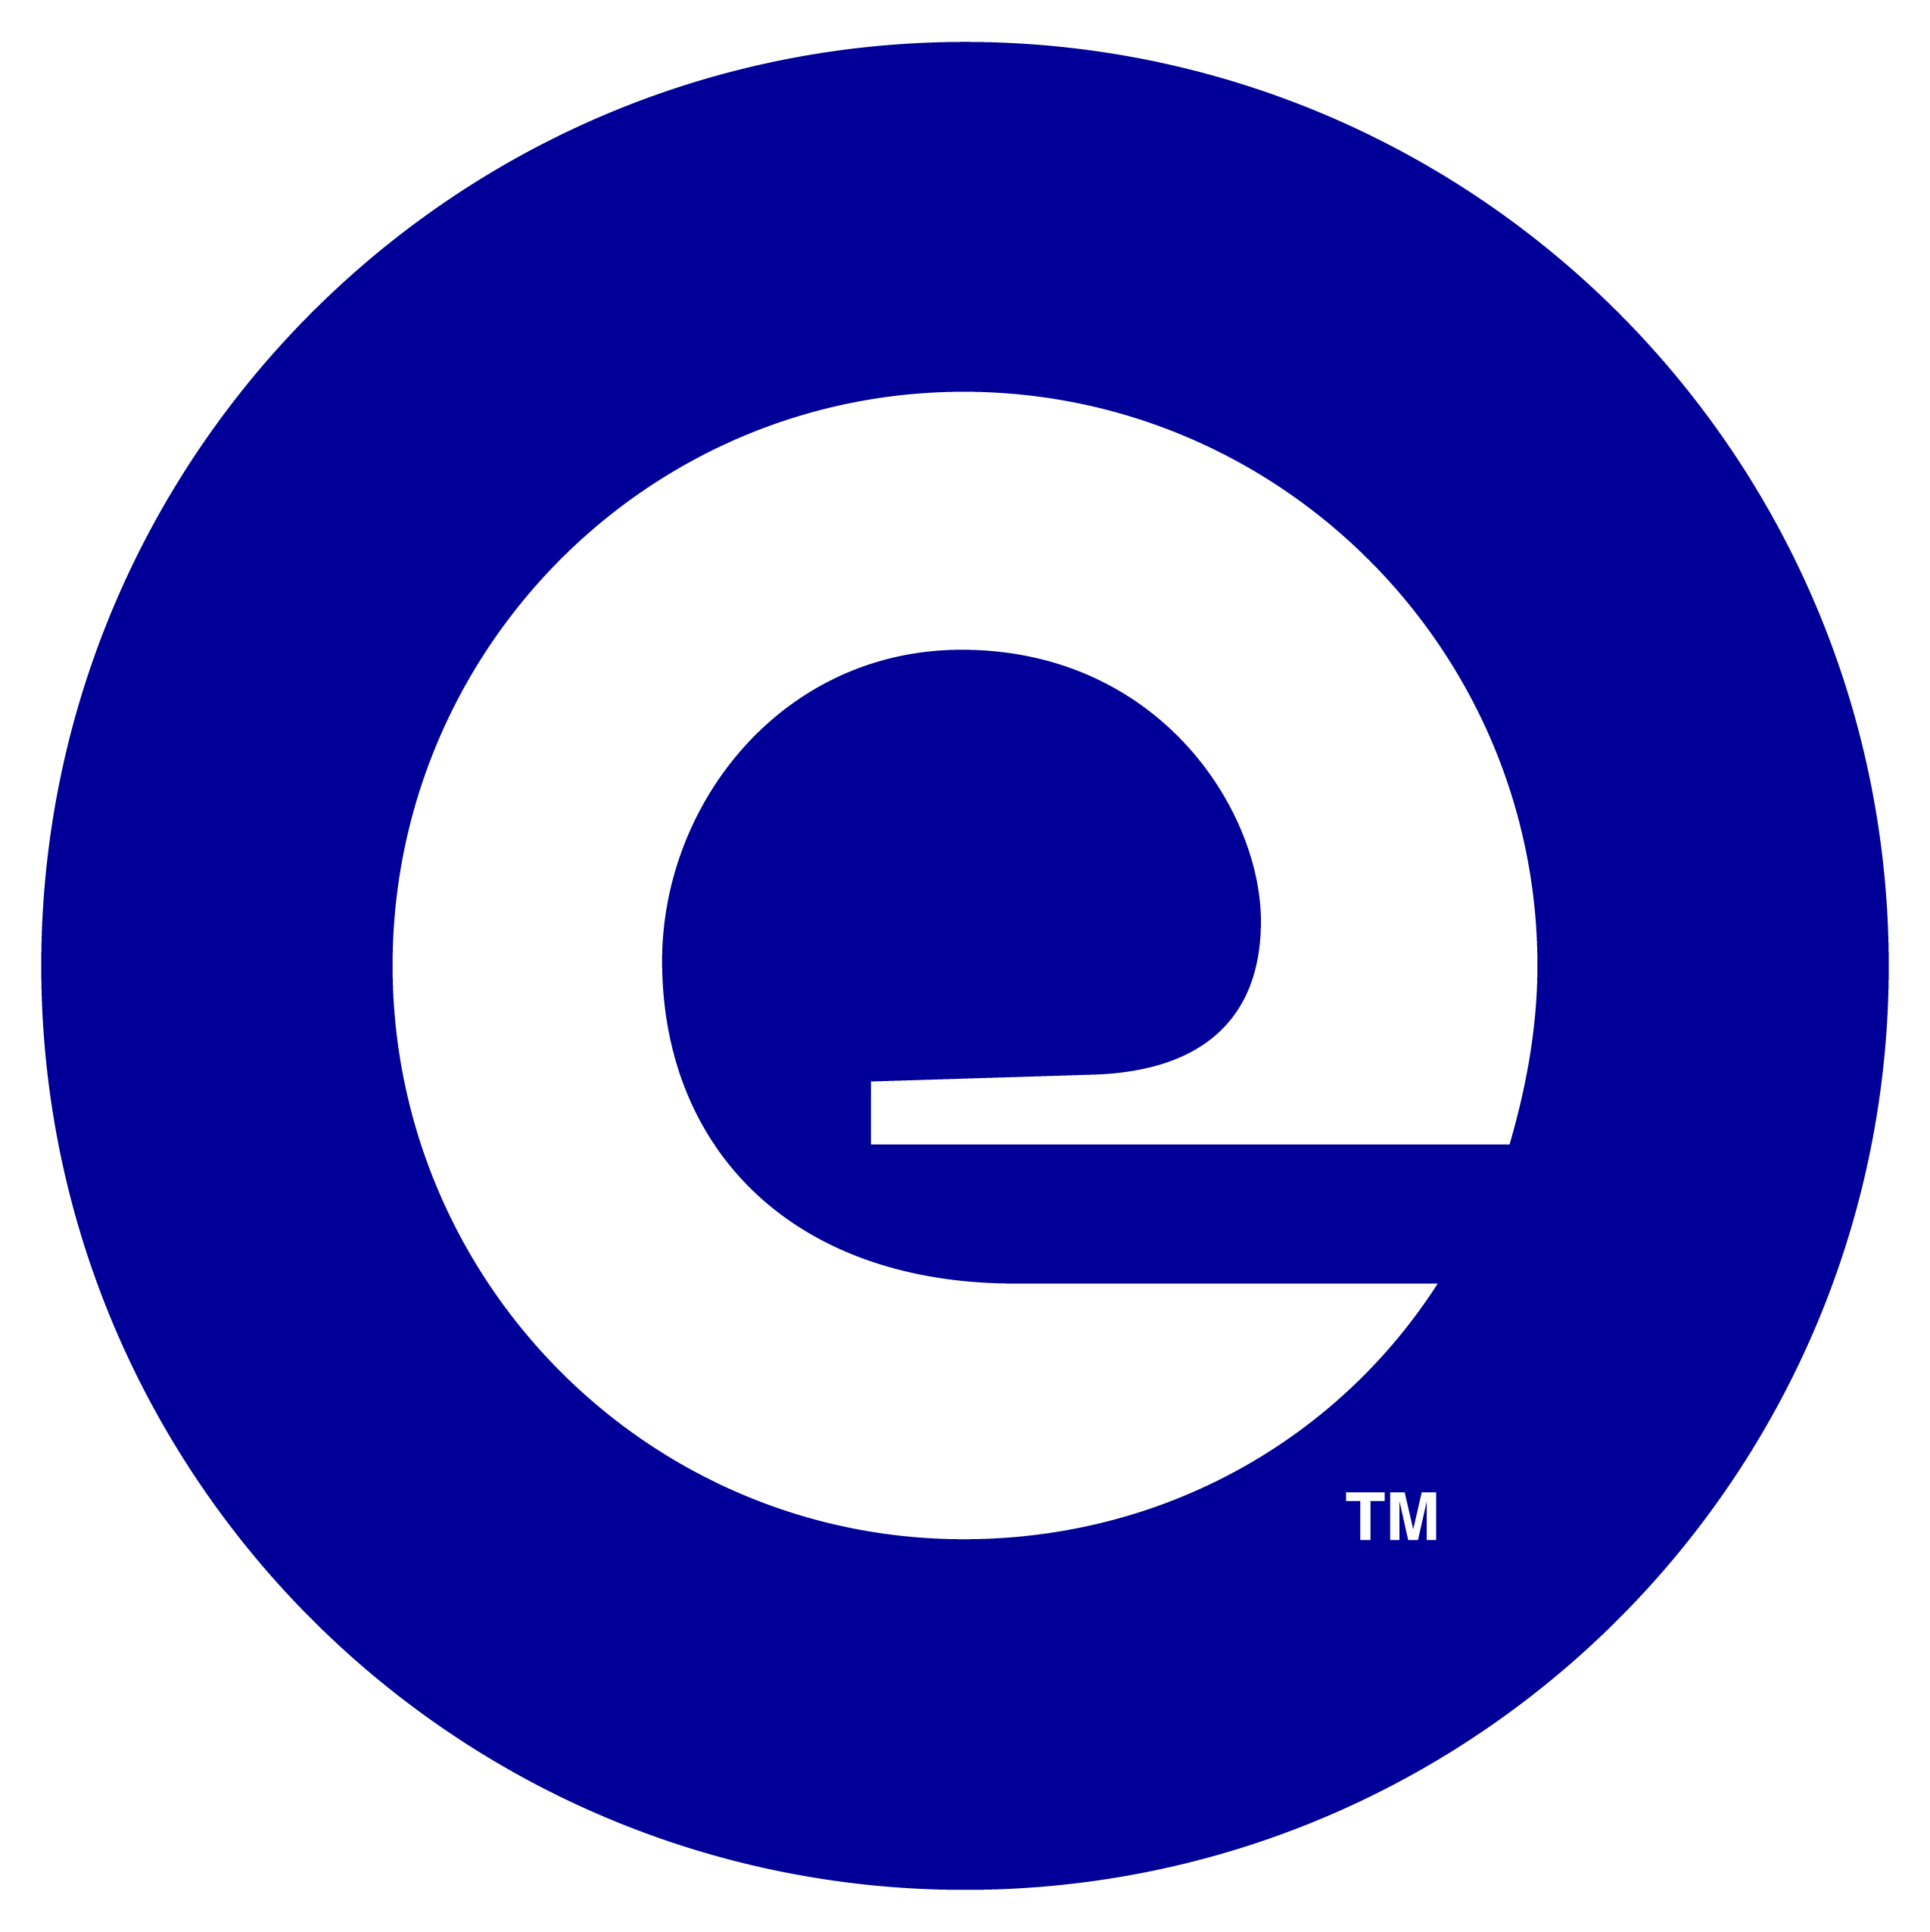 expedia logo